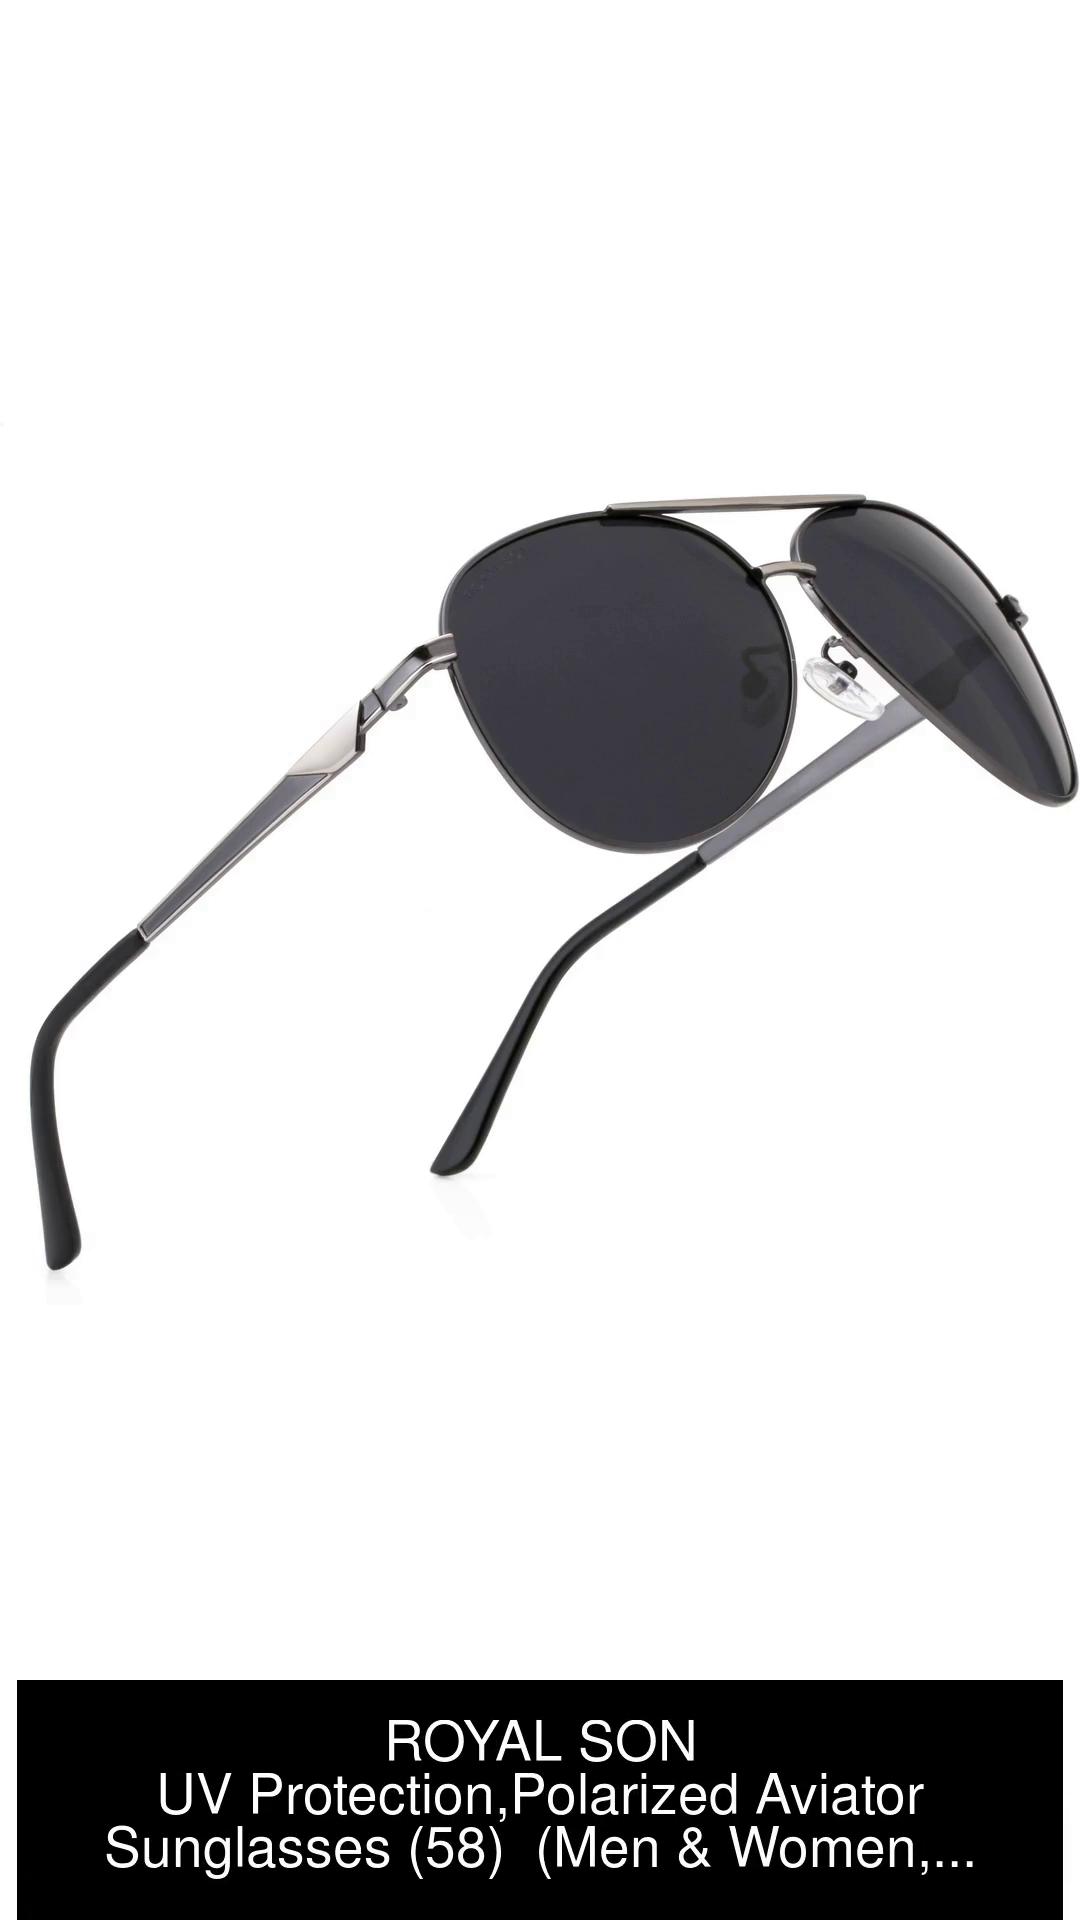 Royal Son Sunglasses : Buy Royal Son Aviator Polarized UV